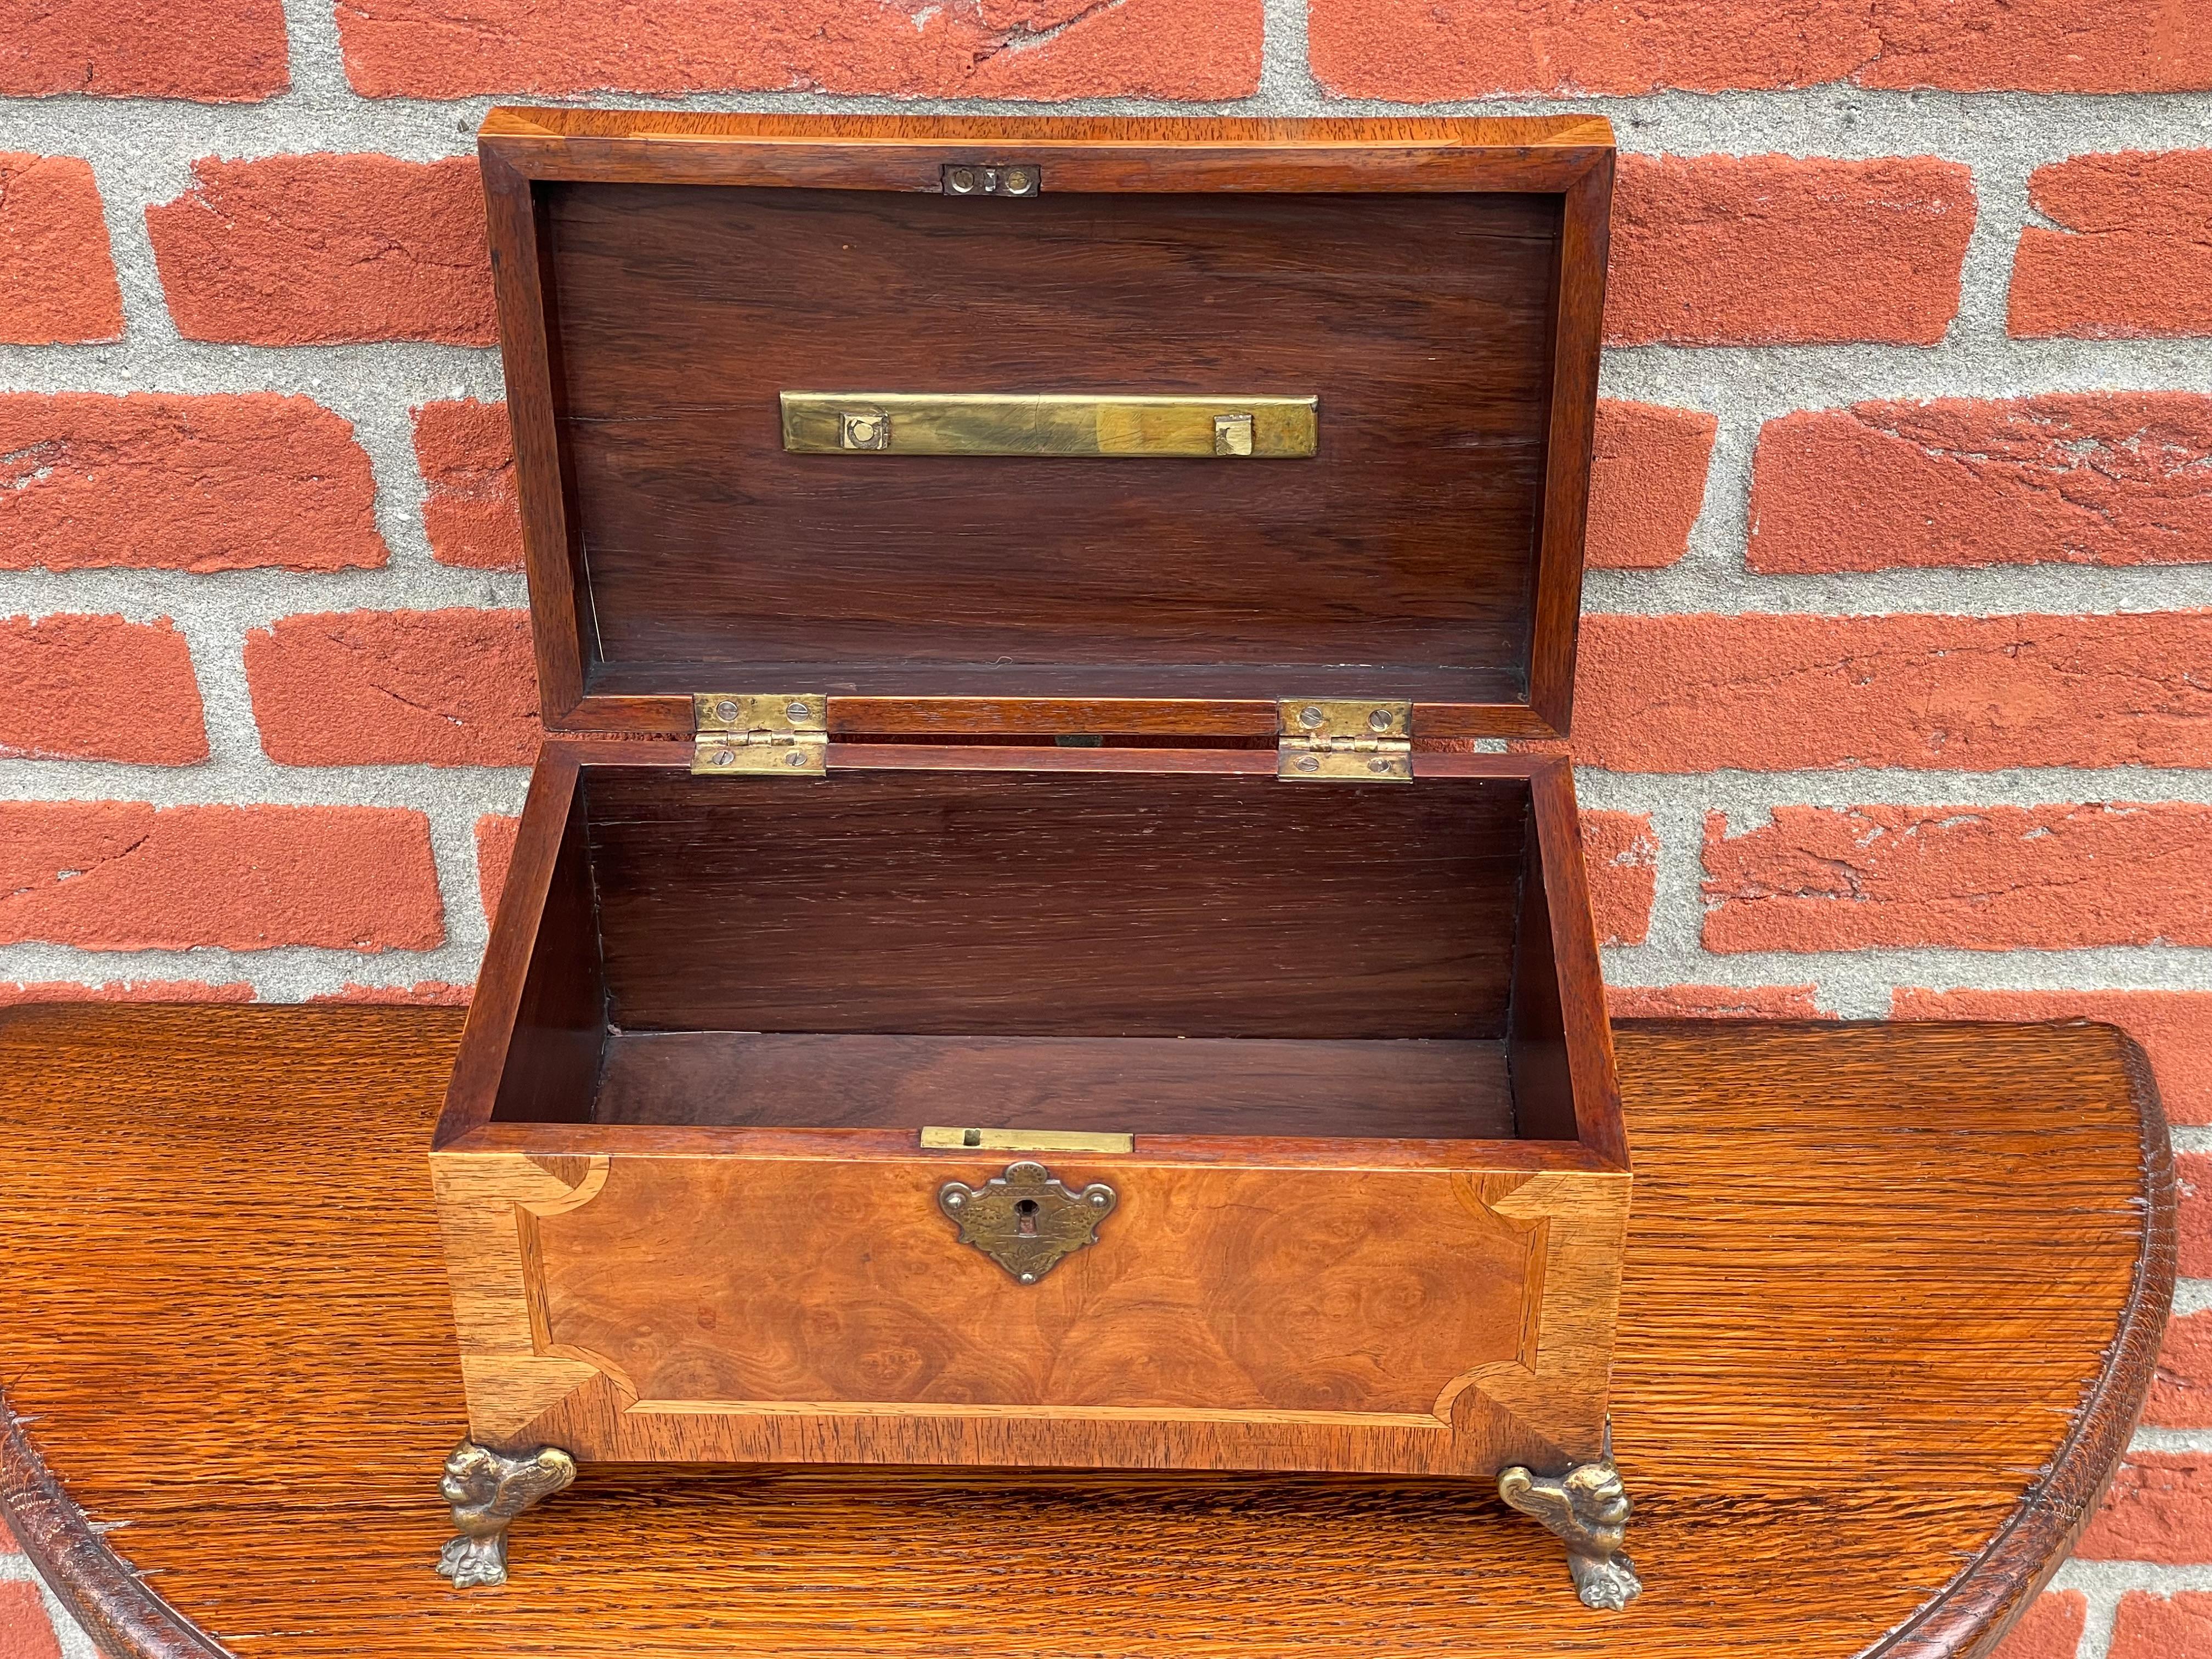 Stunning Late 1800s Walnut, Burl Walnut & Bronze Jewelry Box with a Great Patina 2